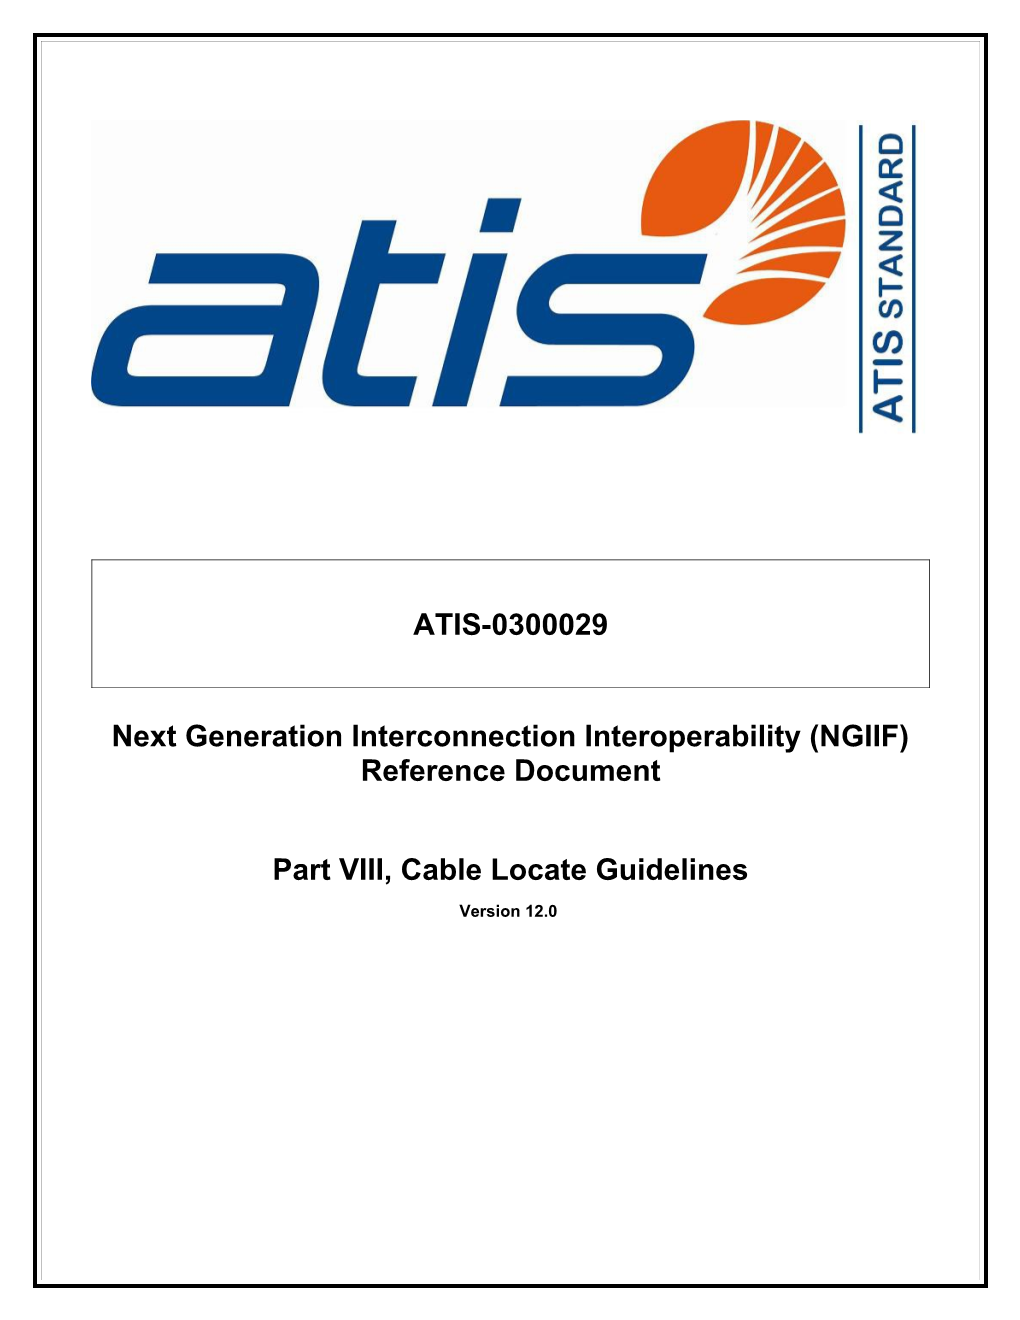 Next Generation Interconnection Interoperability (NGIIF) Reference Document s1